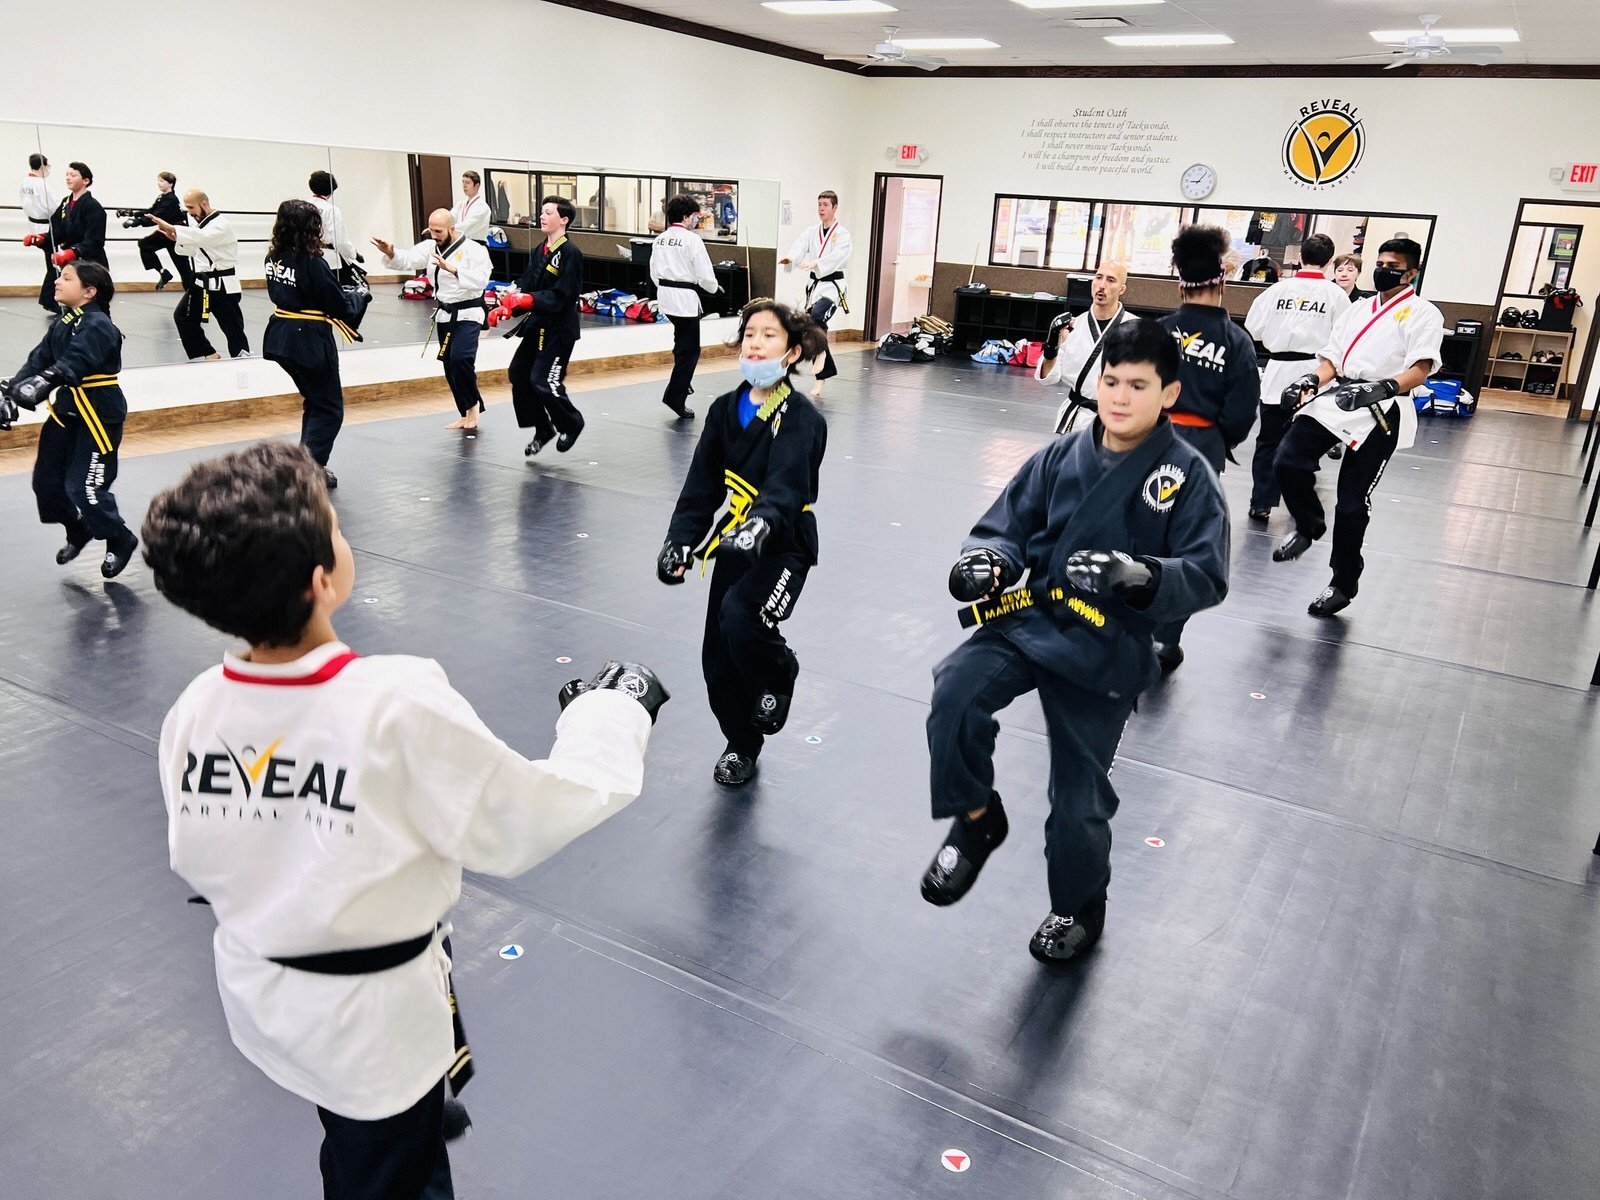 reveal-martial-arts-karate-classes-southlake-grapevine-colleyville-keller-alliance-heritage-fort-worth-1.jpeg